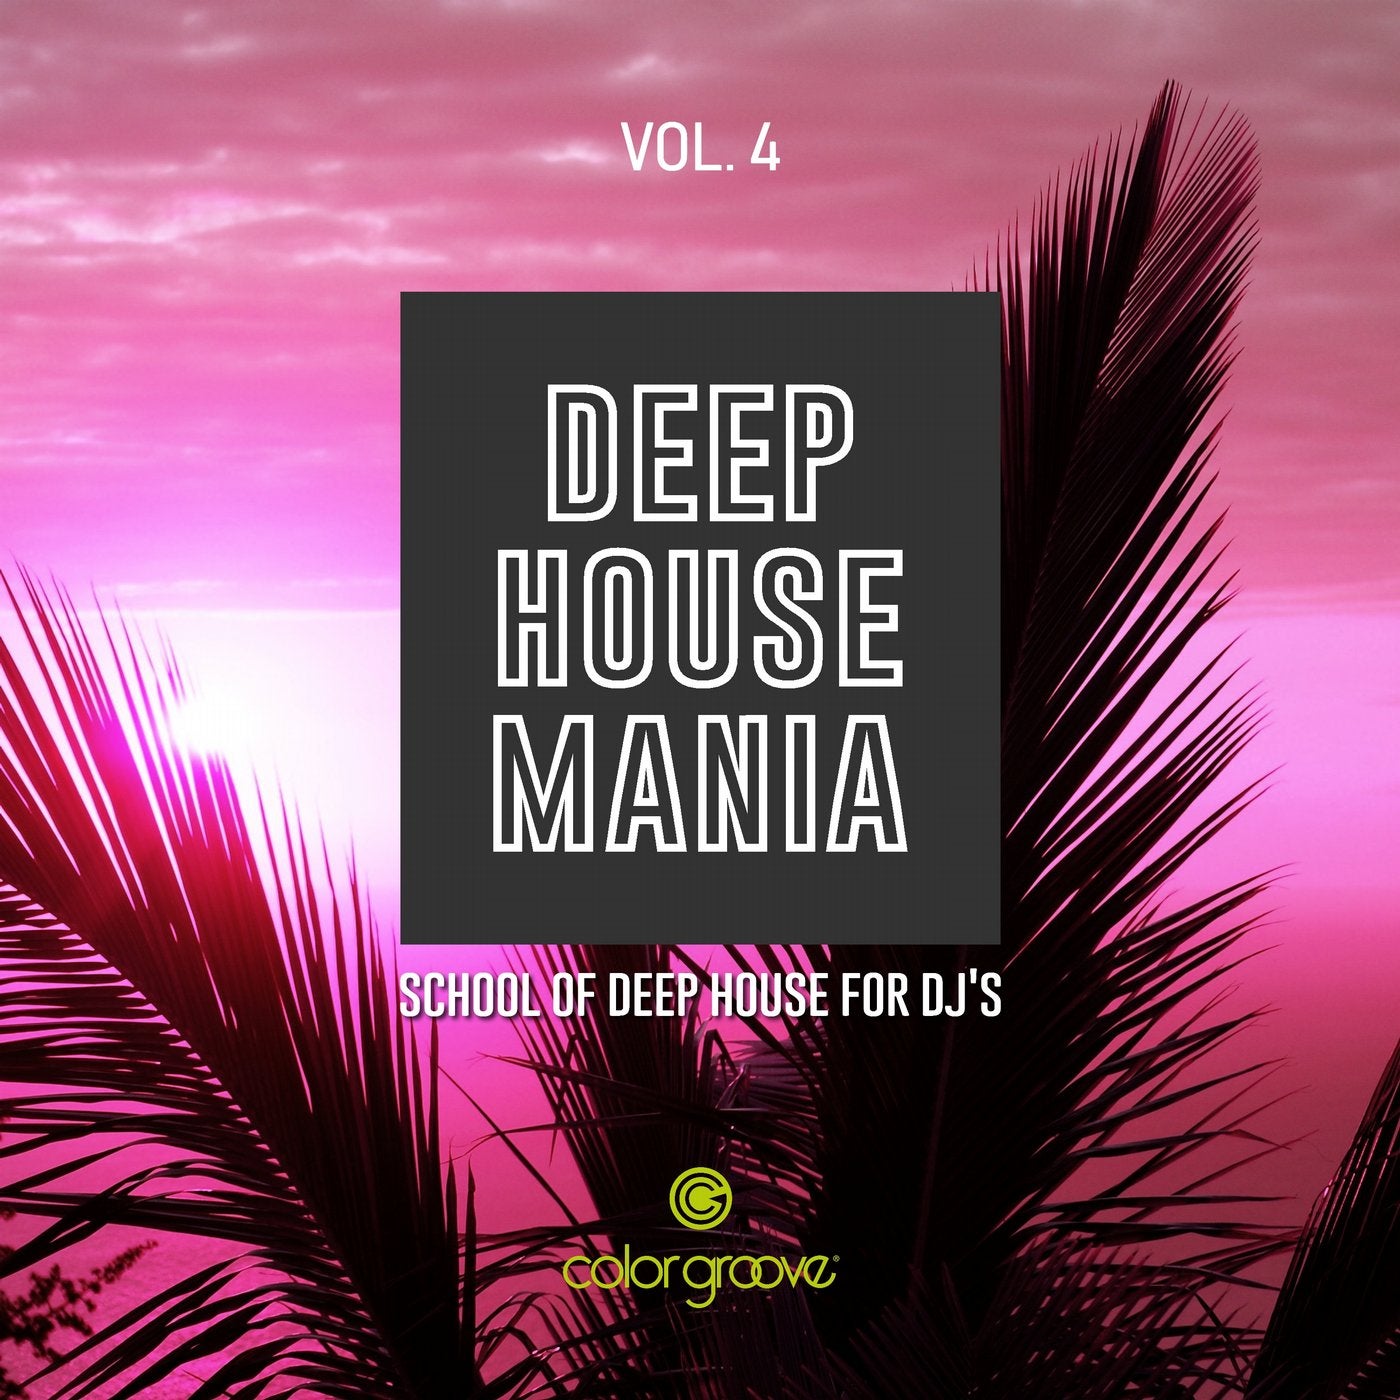 Deep House Mania, Vol. 4 (School Of Deep House For DJ's)